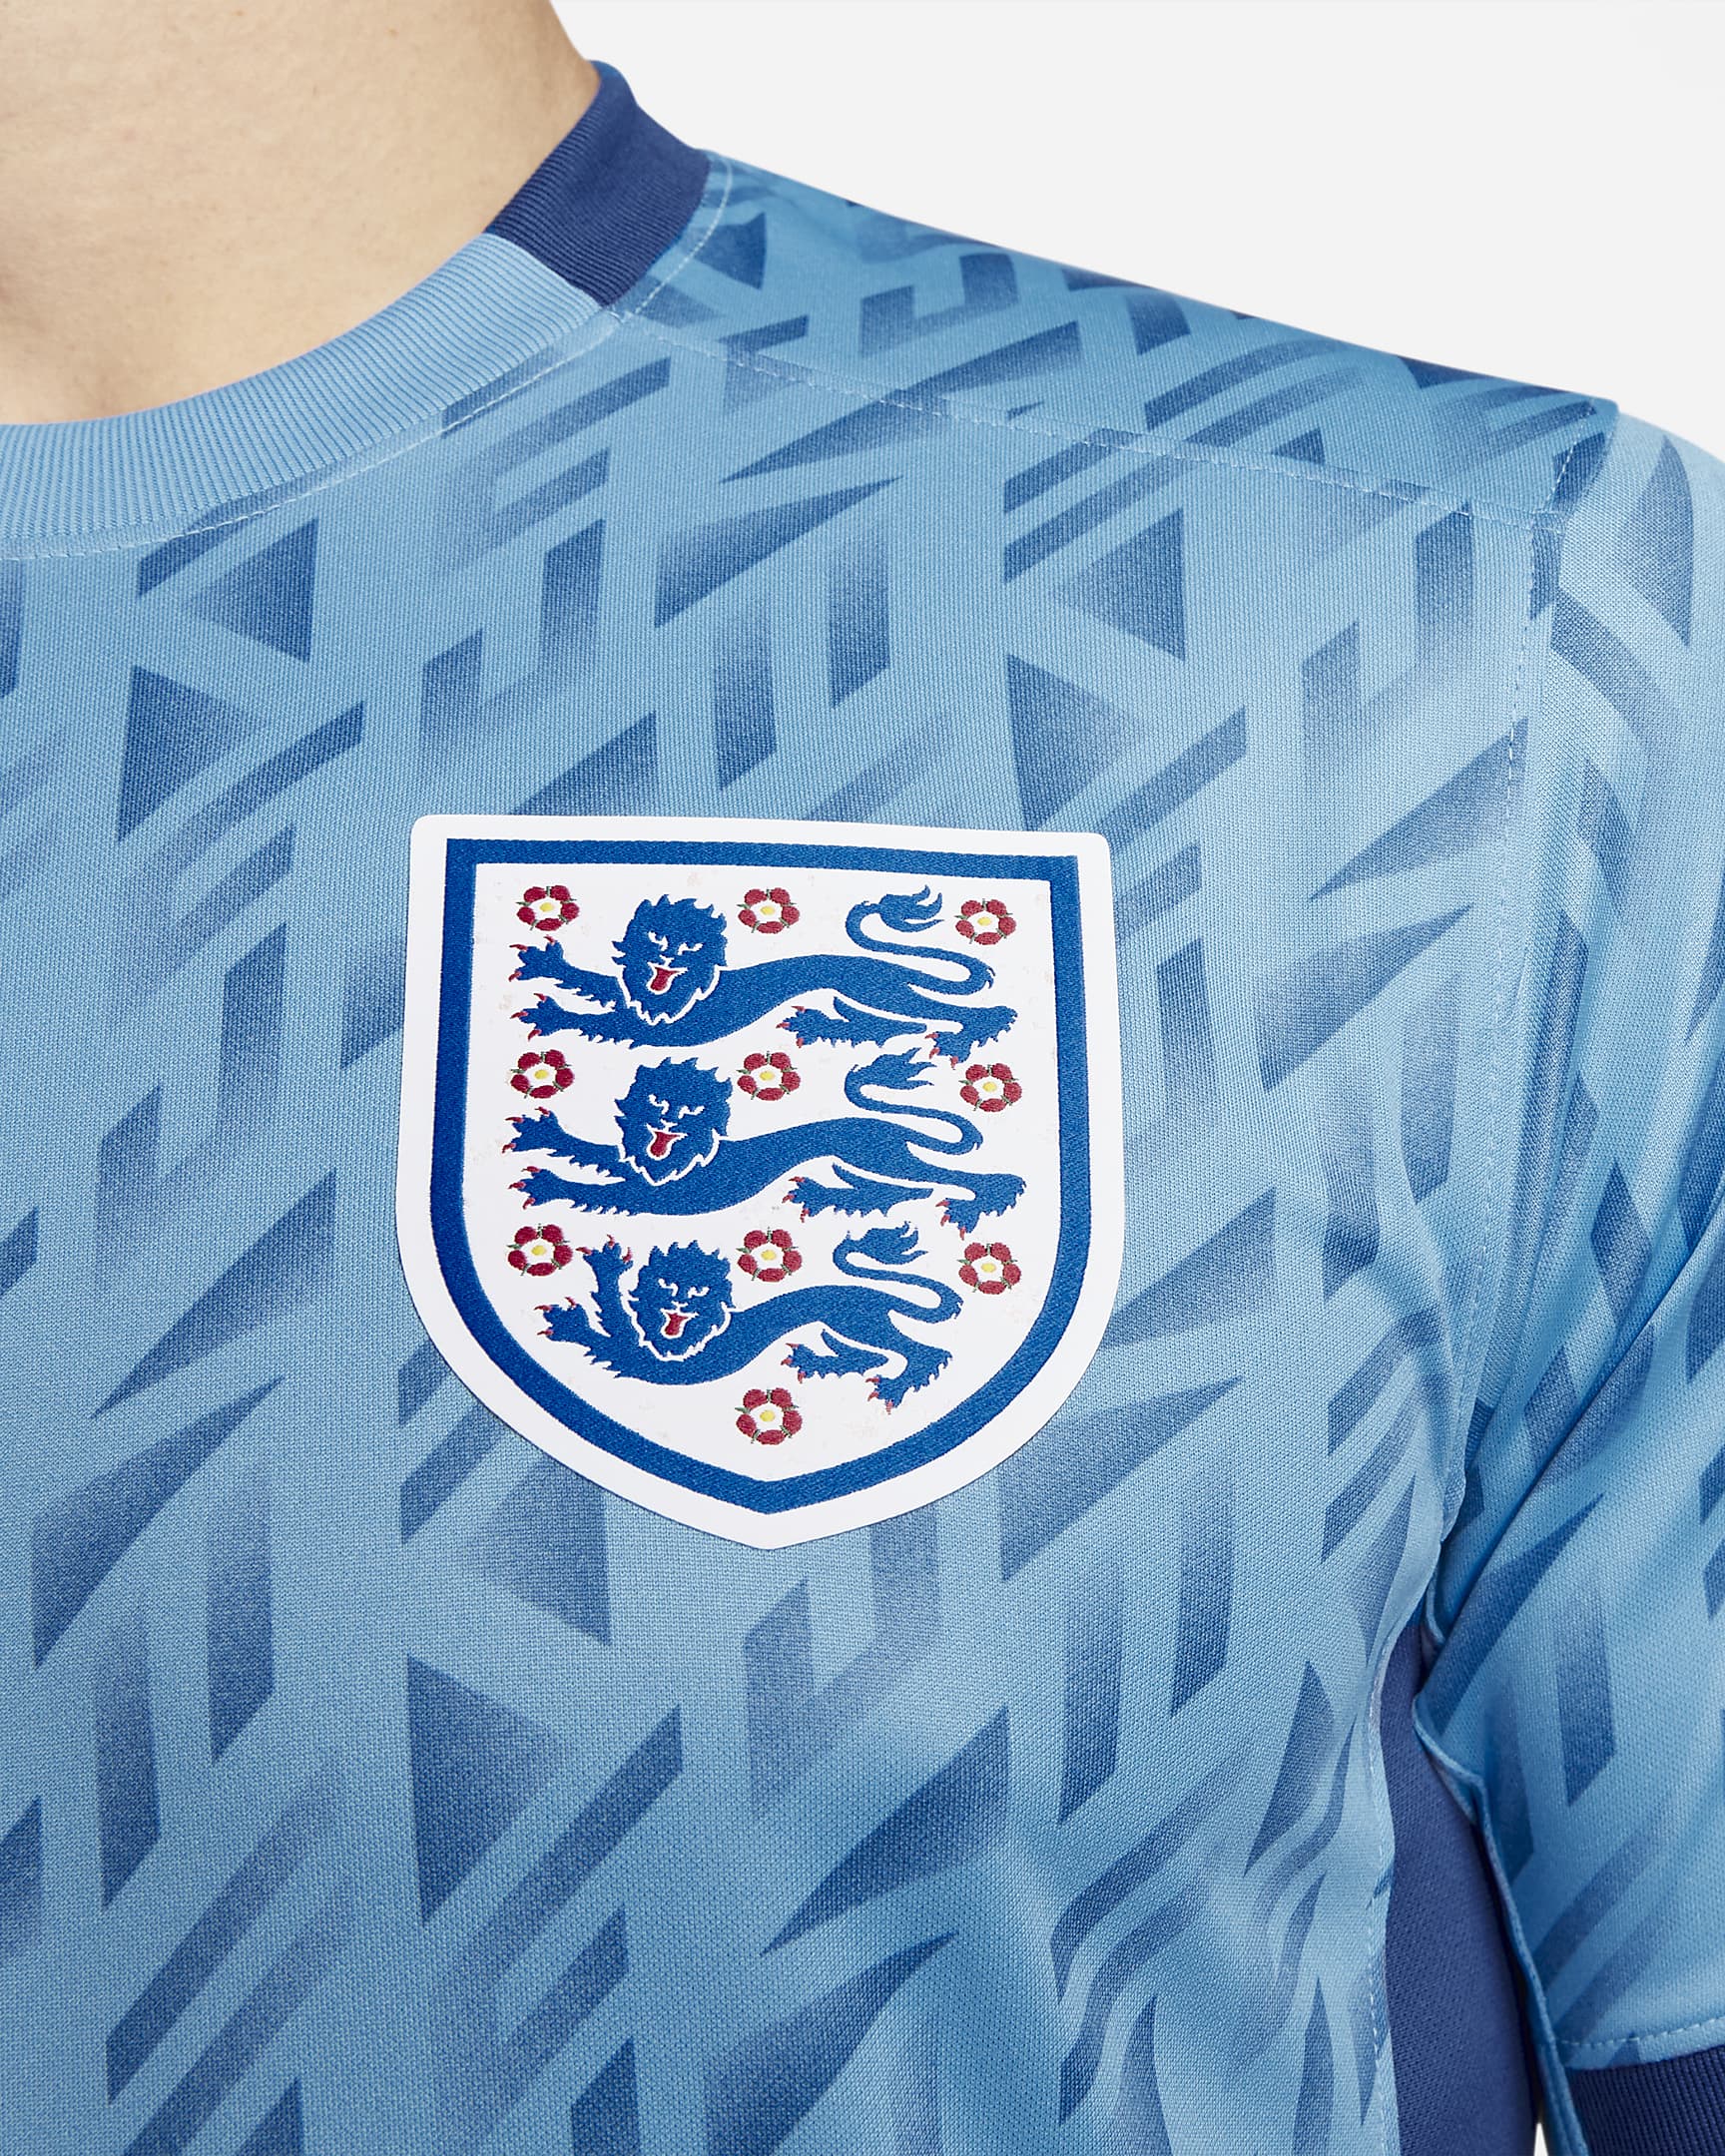 Camiseta de visitante de Inglaterra Nike 23 Costa/Azul gimnasio/Blanco